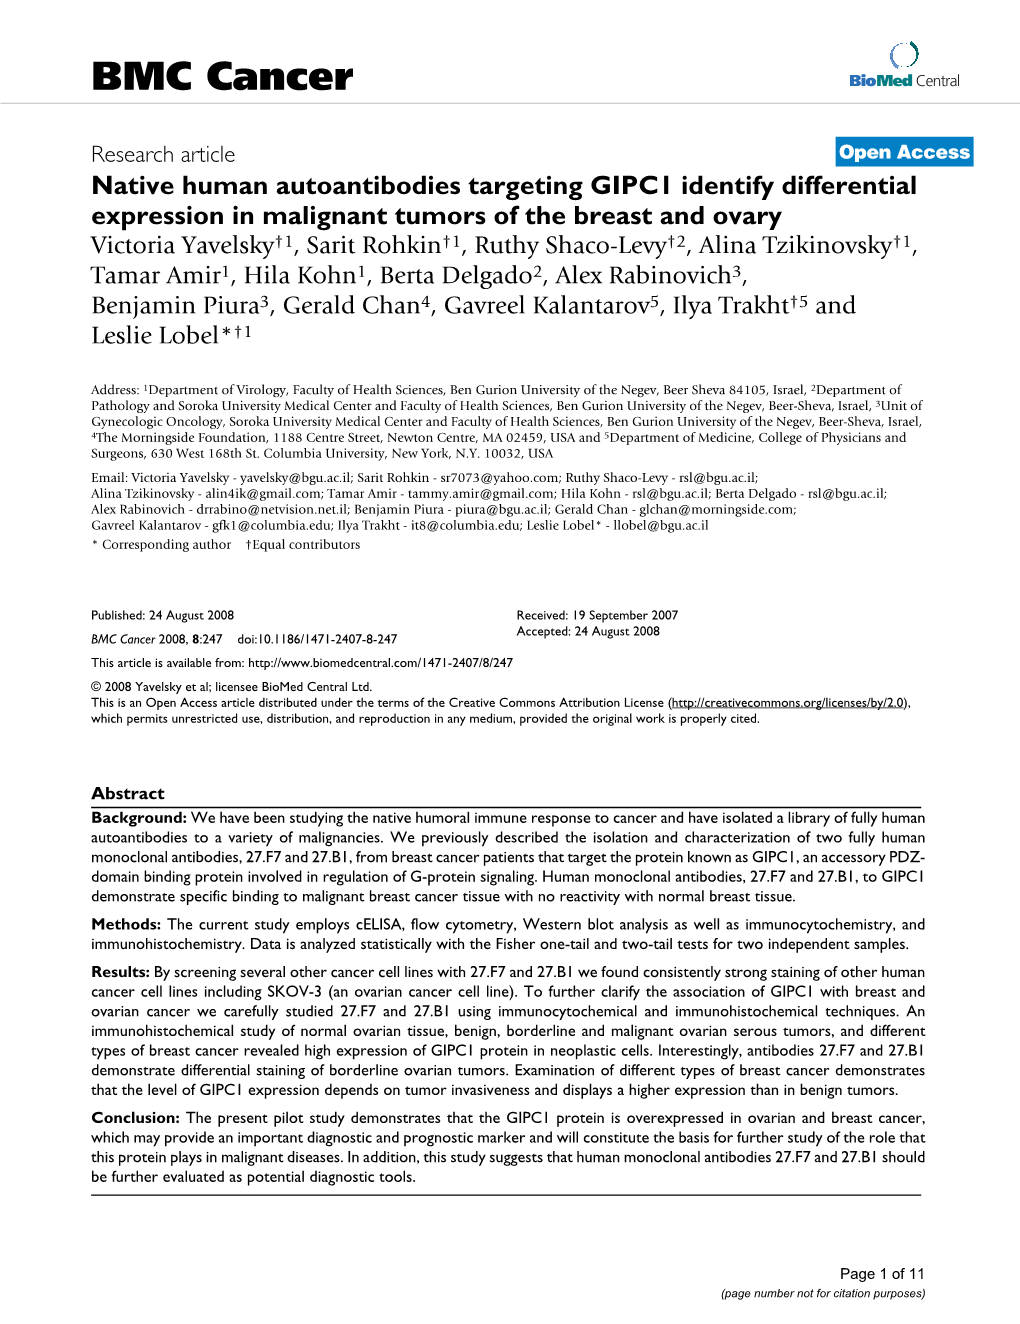 Native Human Autoantibodies Targeting GIPC1 Identify Differential